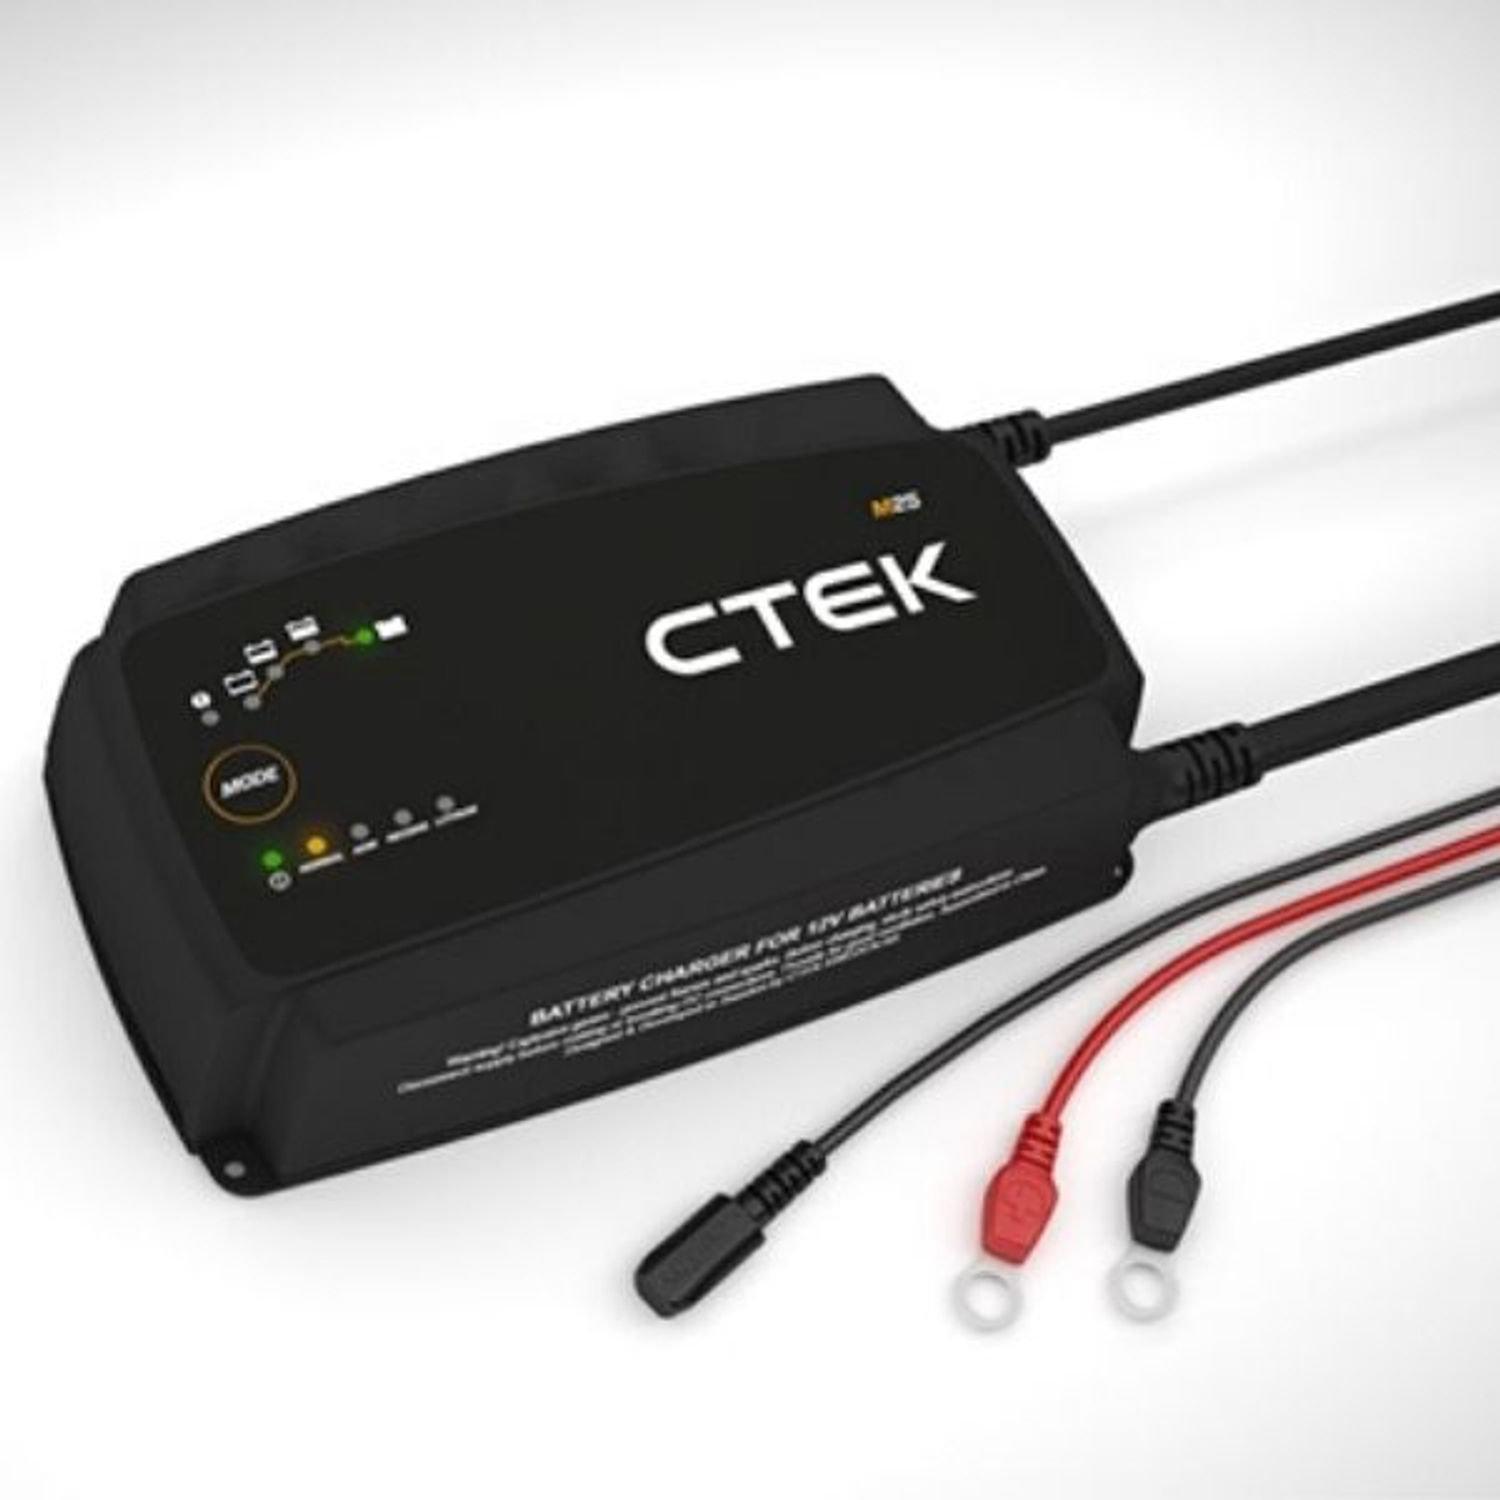 Ctek M25 EU Batteriladdare 12v 25a